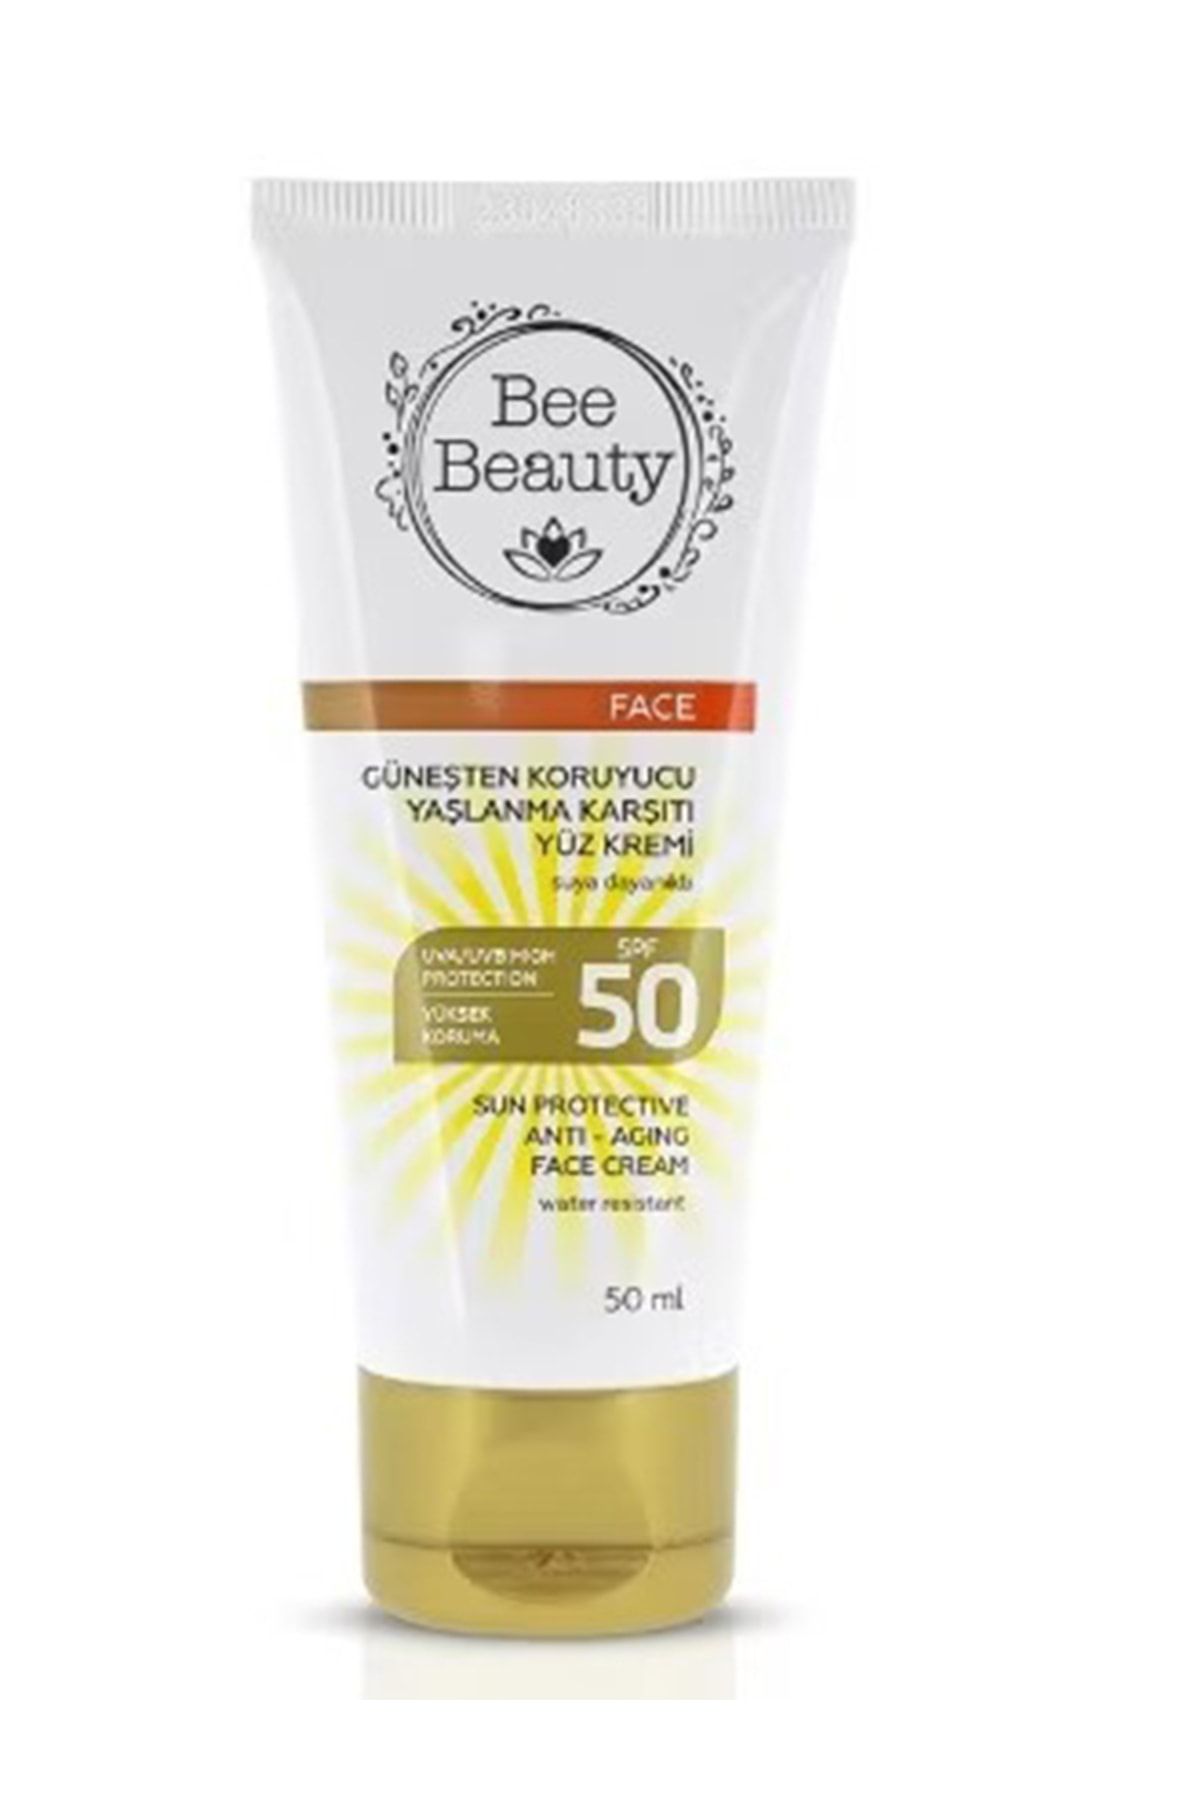 Bee Beauty Koruyucu Yaşlanma Karşıtı Yüz Kremi 50 Spf 50 ml